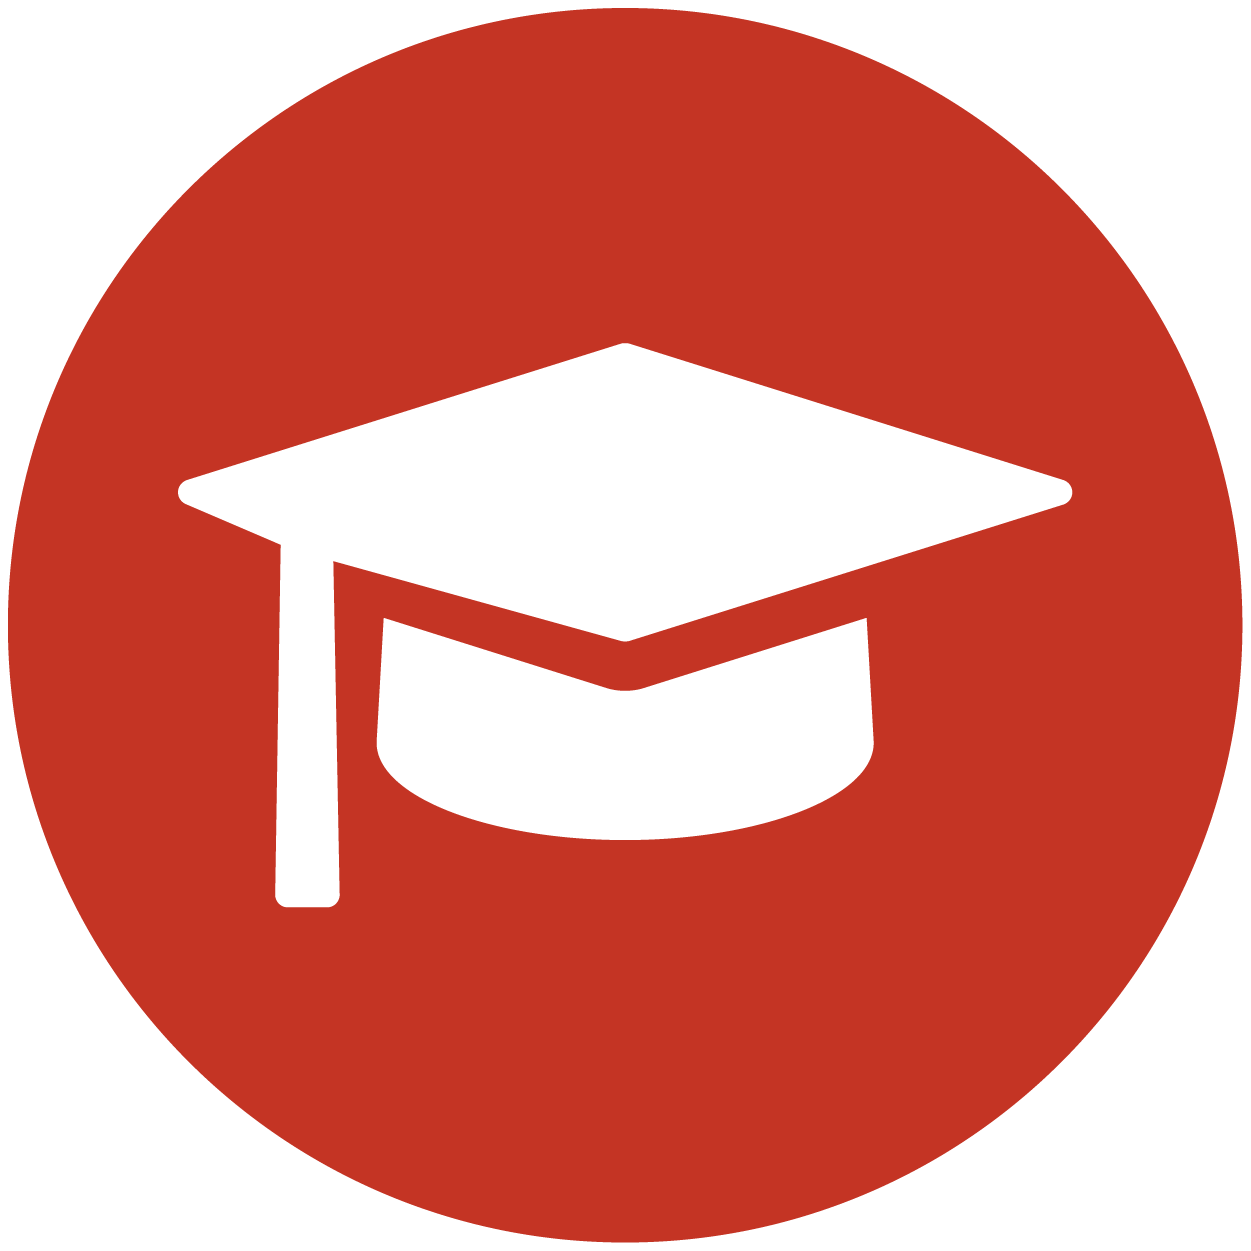 graduation cap icon for explore grade school